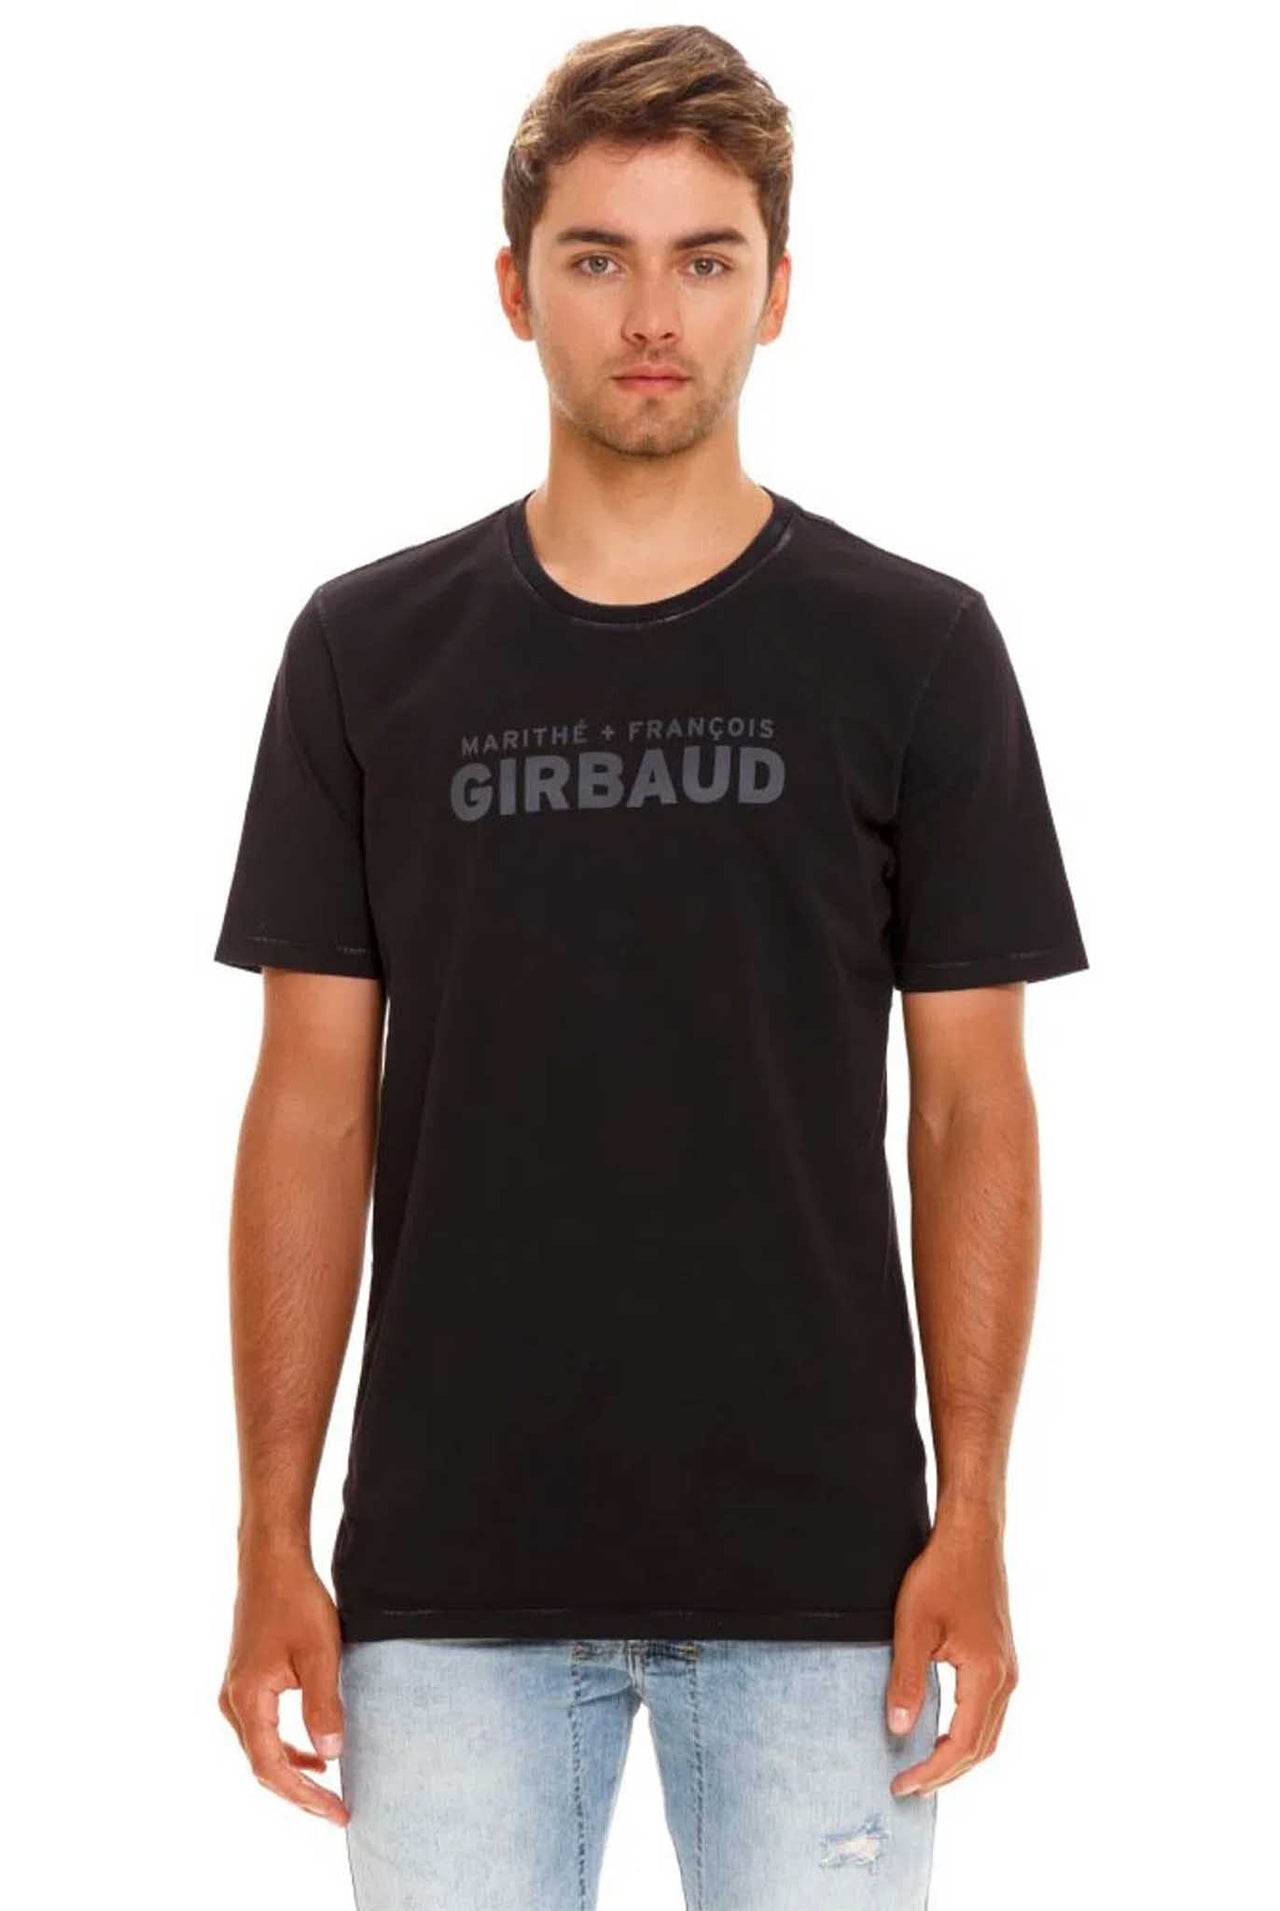 Camiseta Girbaud 2518